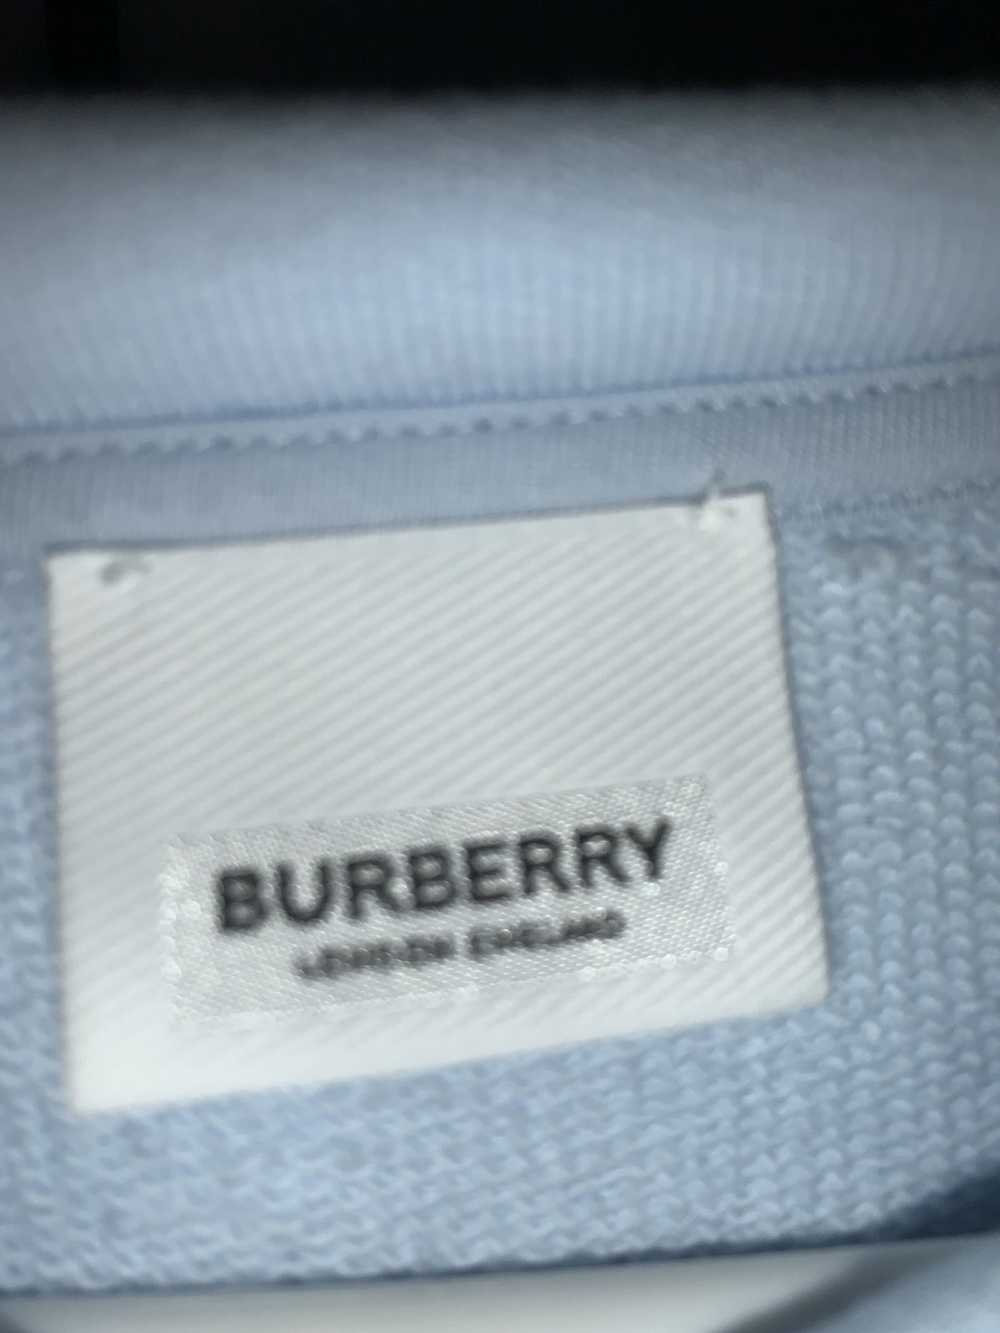 Burberry Burberry sweatshirt - image 3